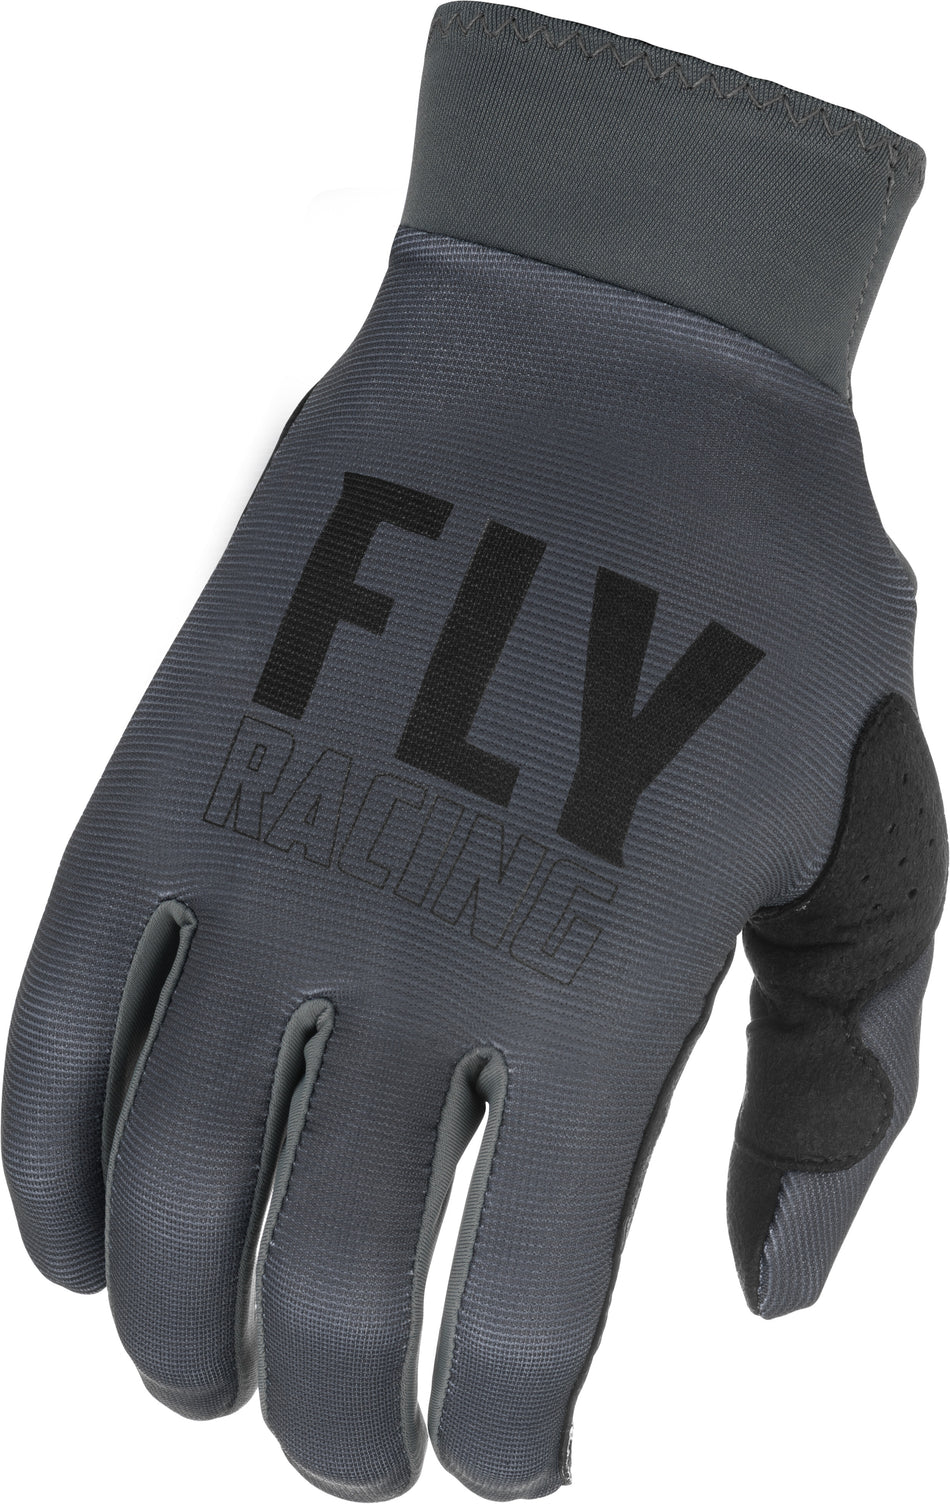 FLY RACING Pro Lite Gloves Grey/Black 3x 374-8563X